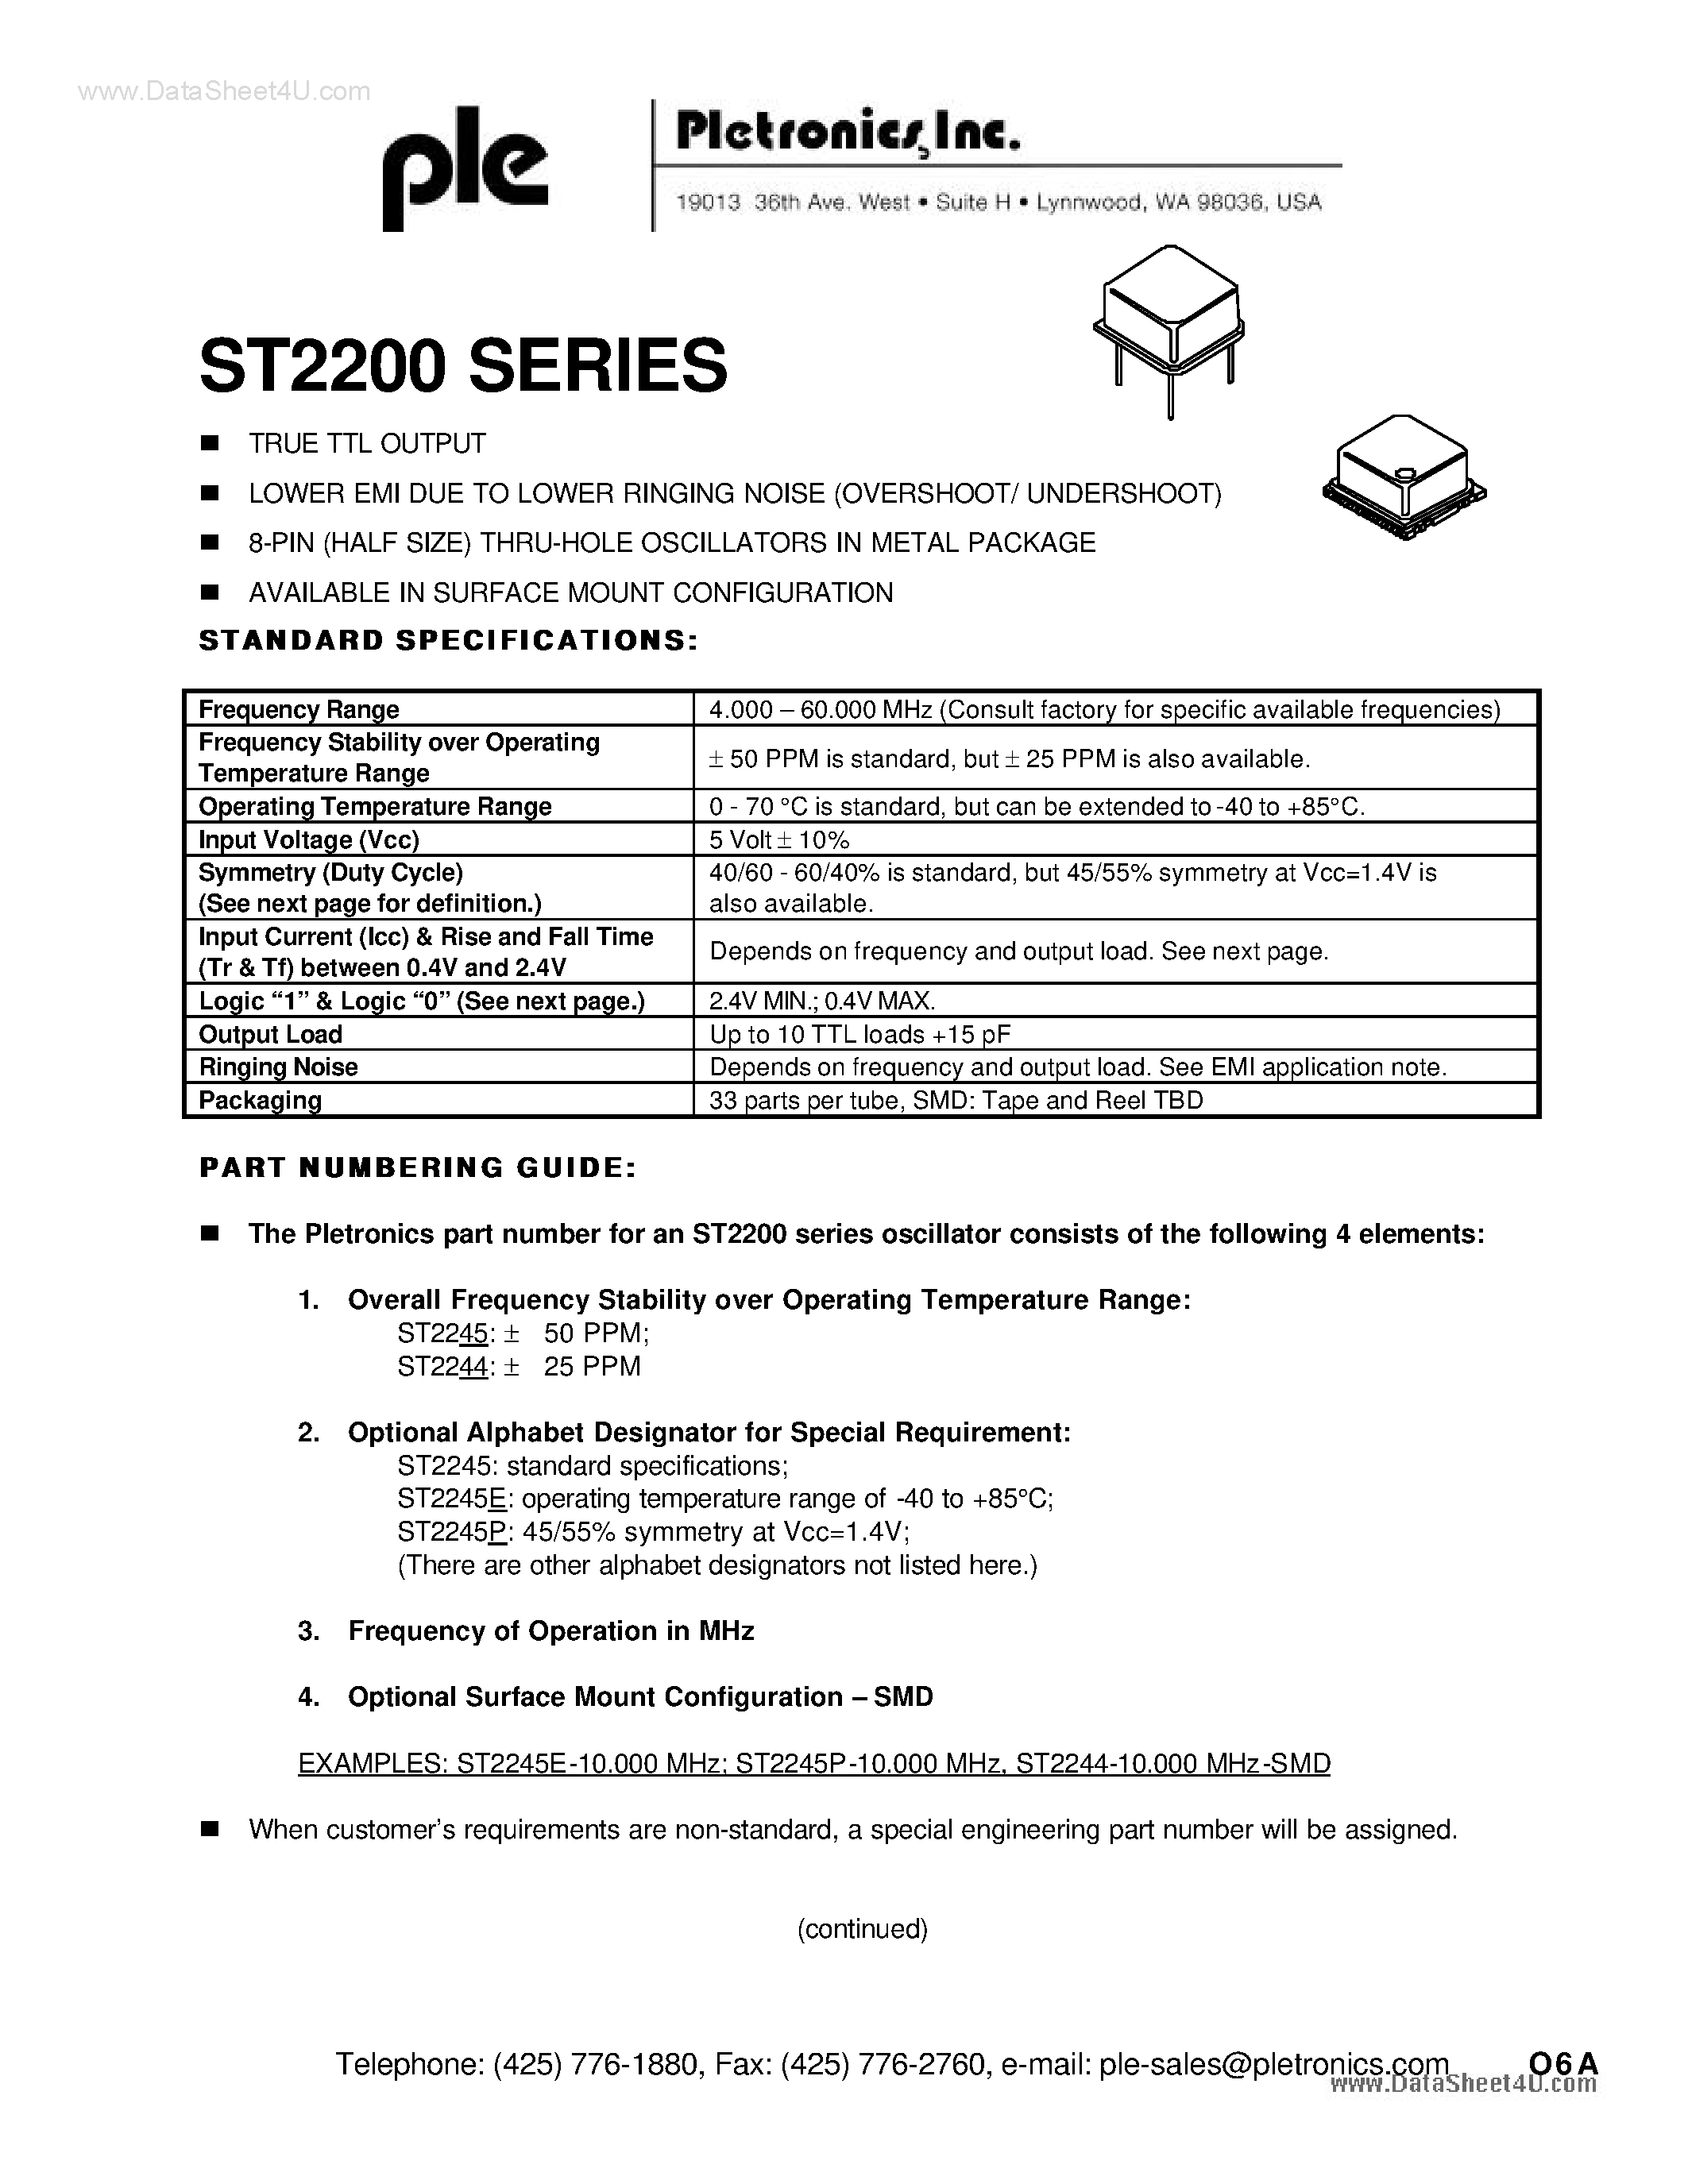 Даташит ST2244-(ST2244 / ST2245) ST2000 Series Crystal Oscillator страница 1